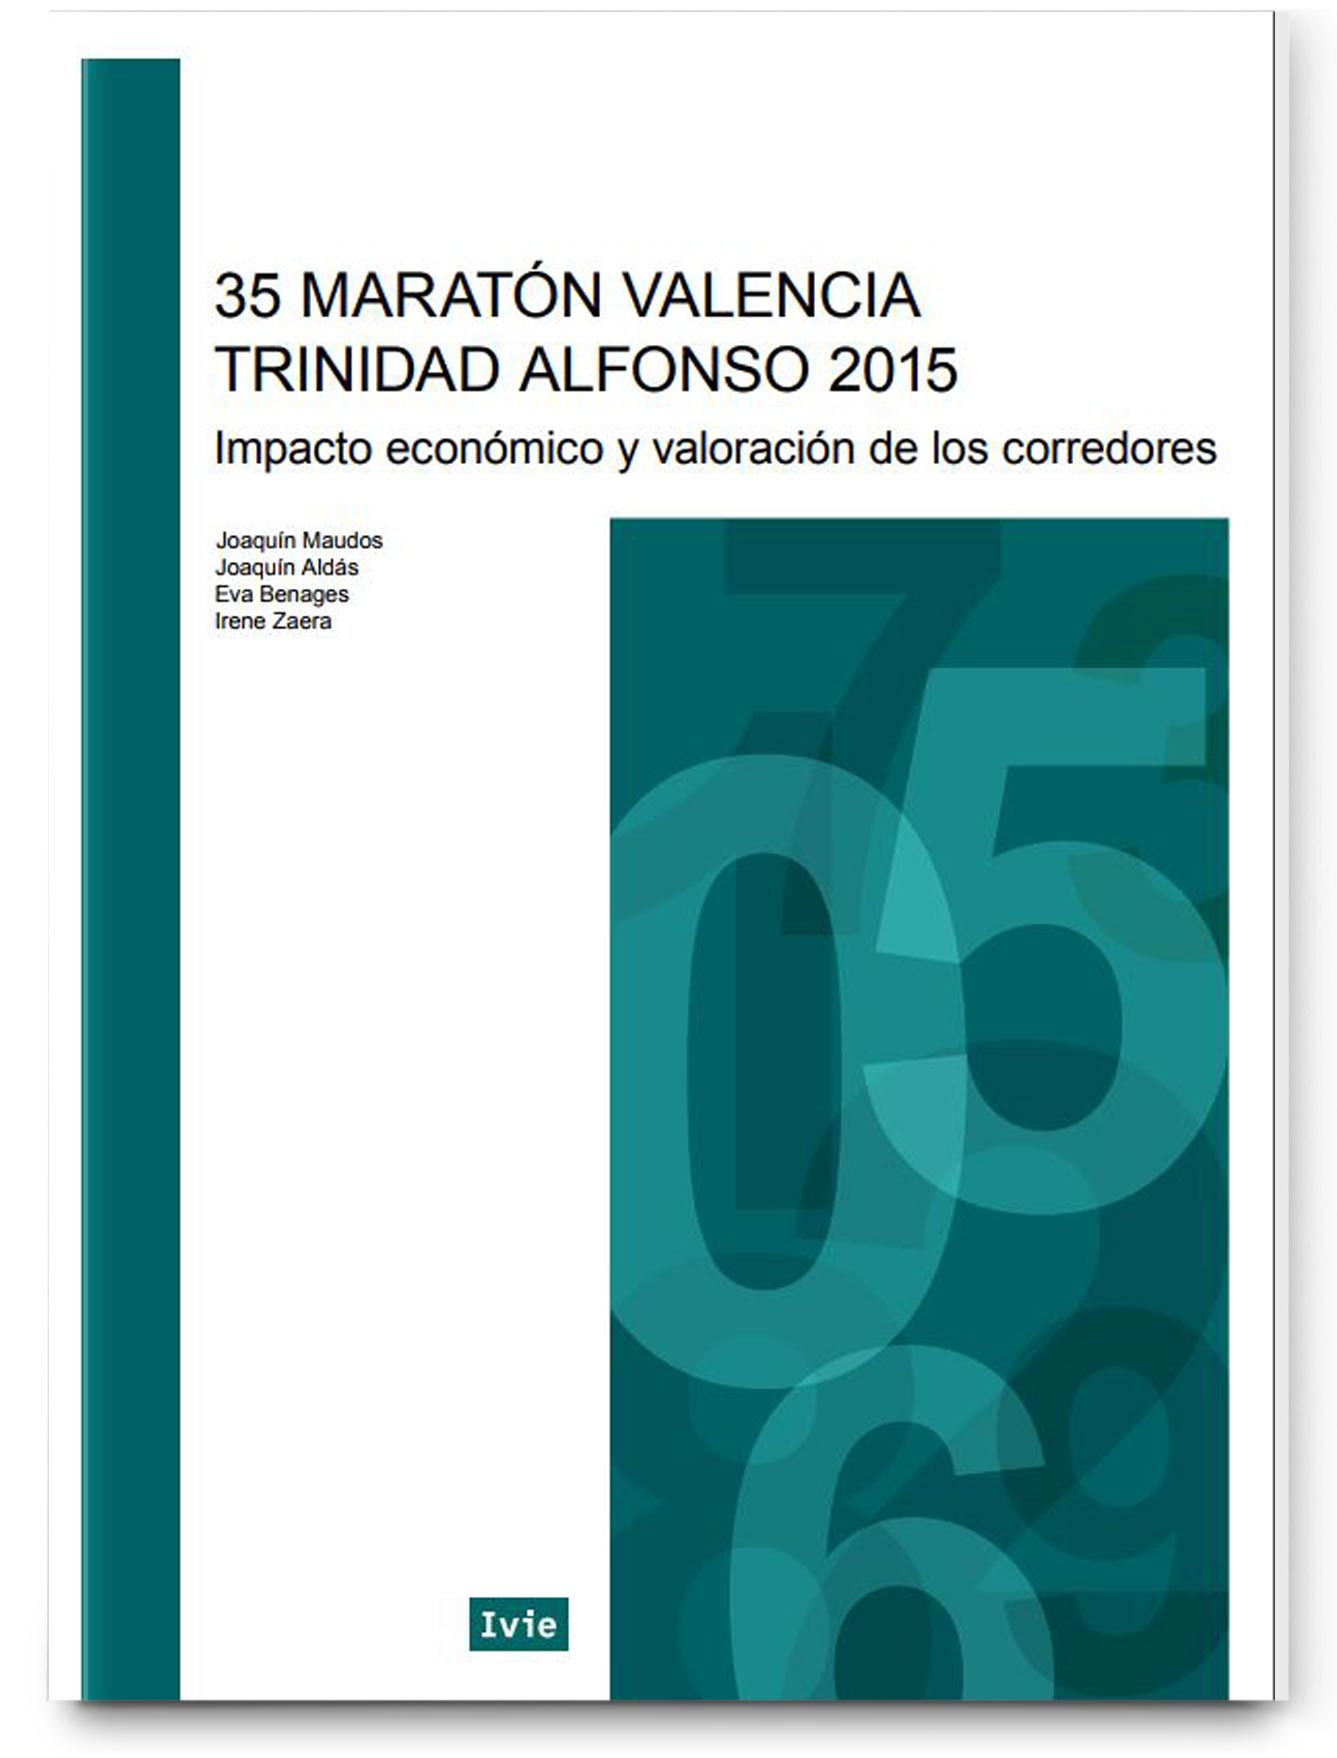 Economic impact of the 35th Valencia Trinidad Alfonso Marathon